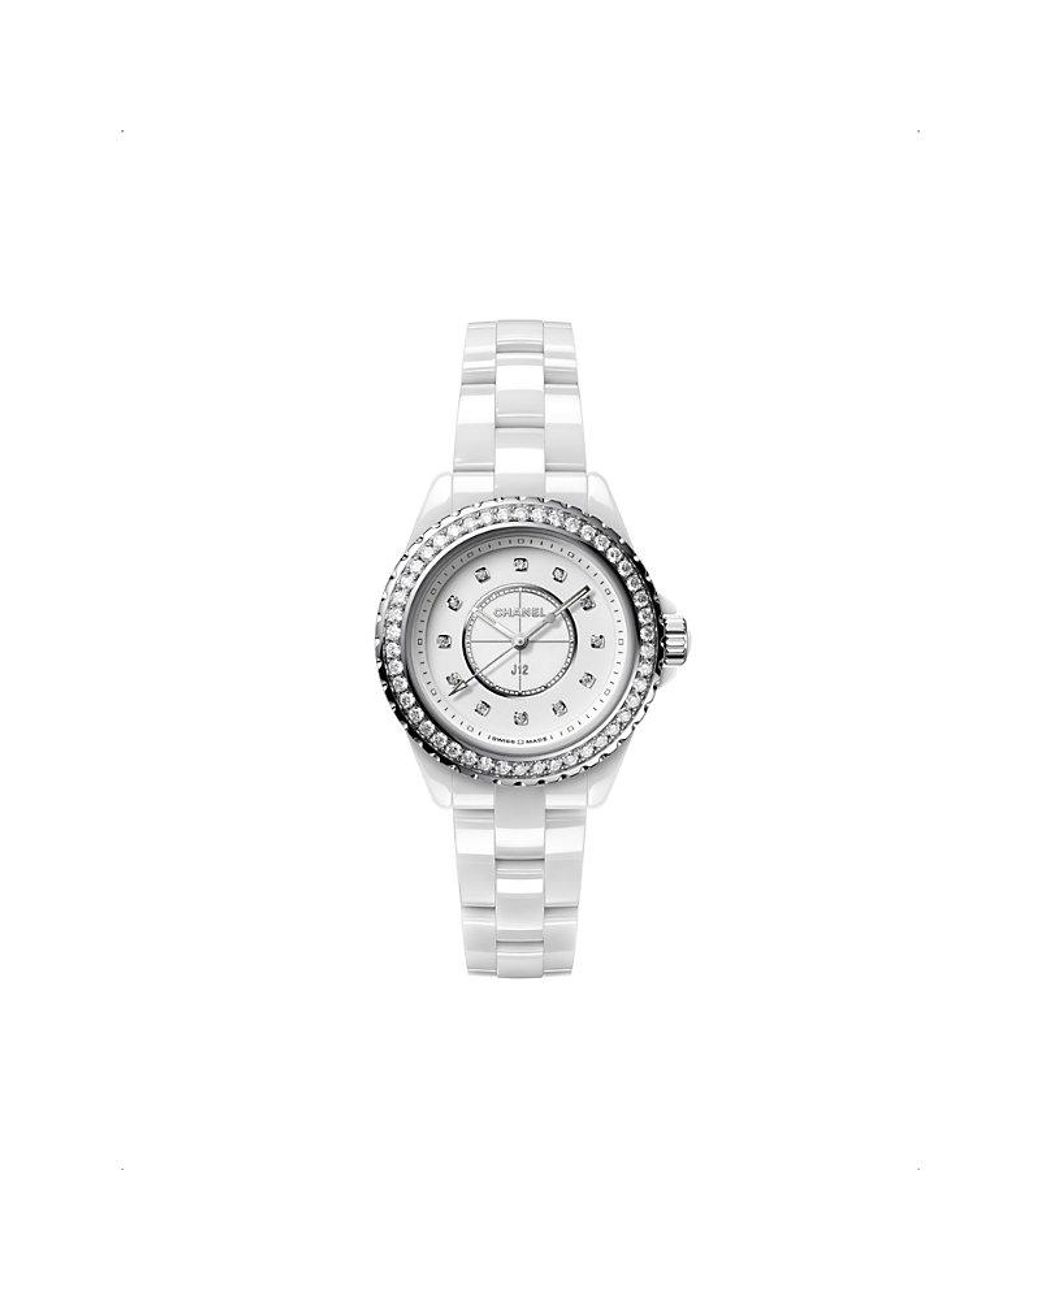 Chanel H6418 J12 Steel, Ceramic And 1.21ct Diamond Quartz Watch in